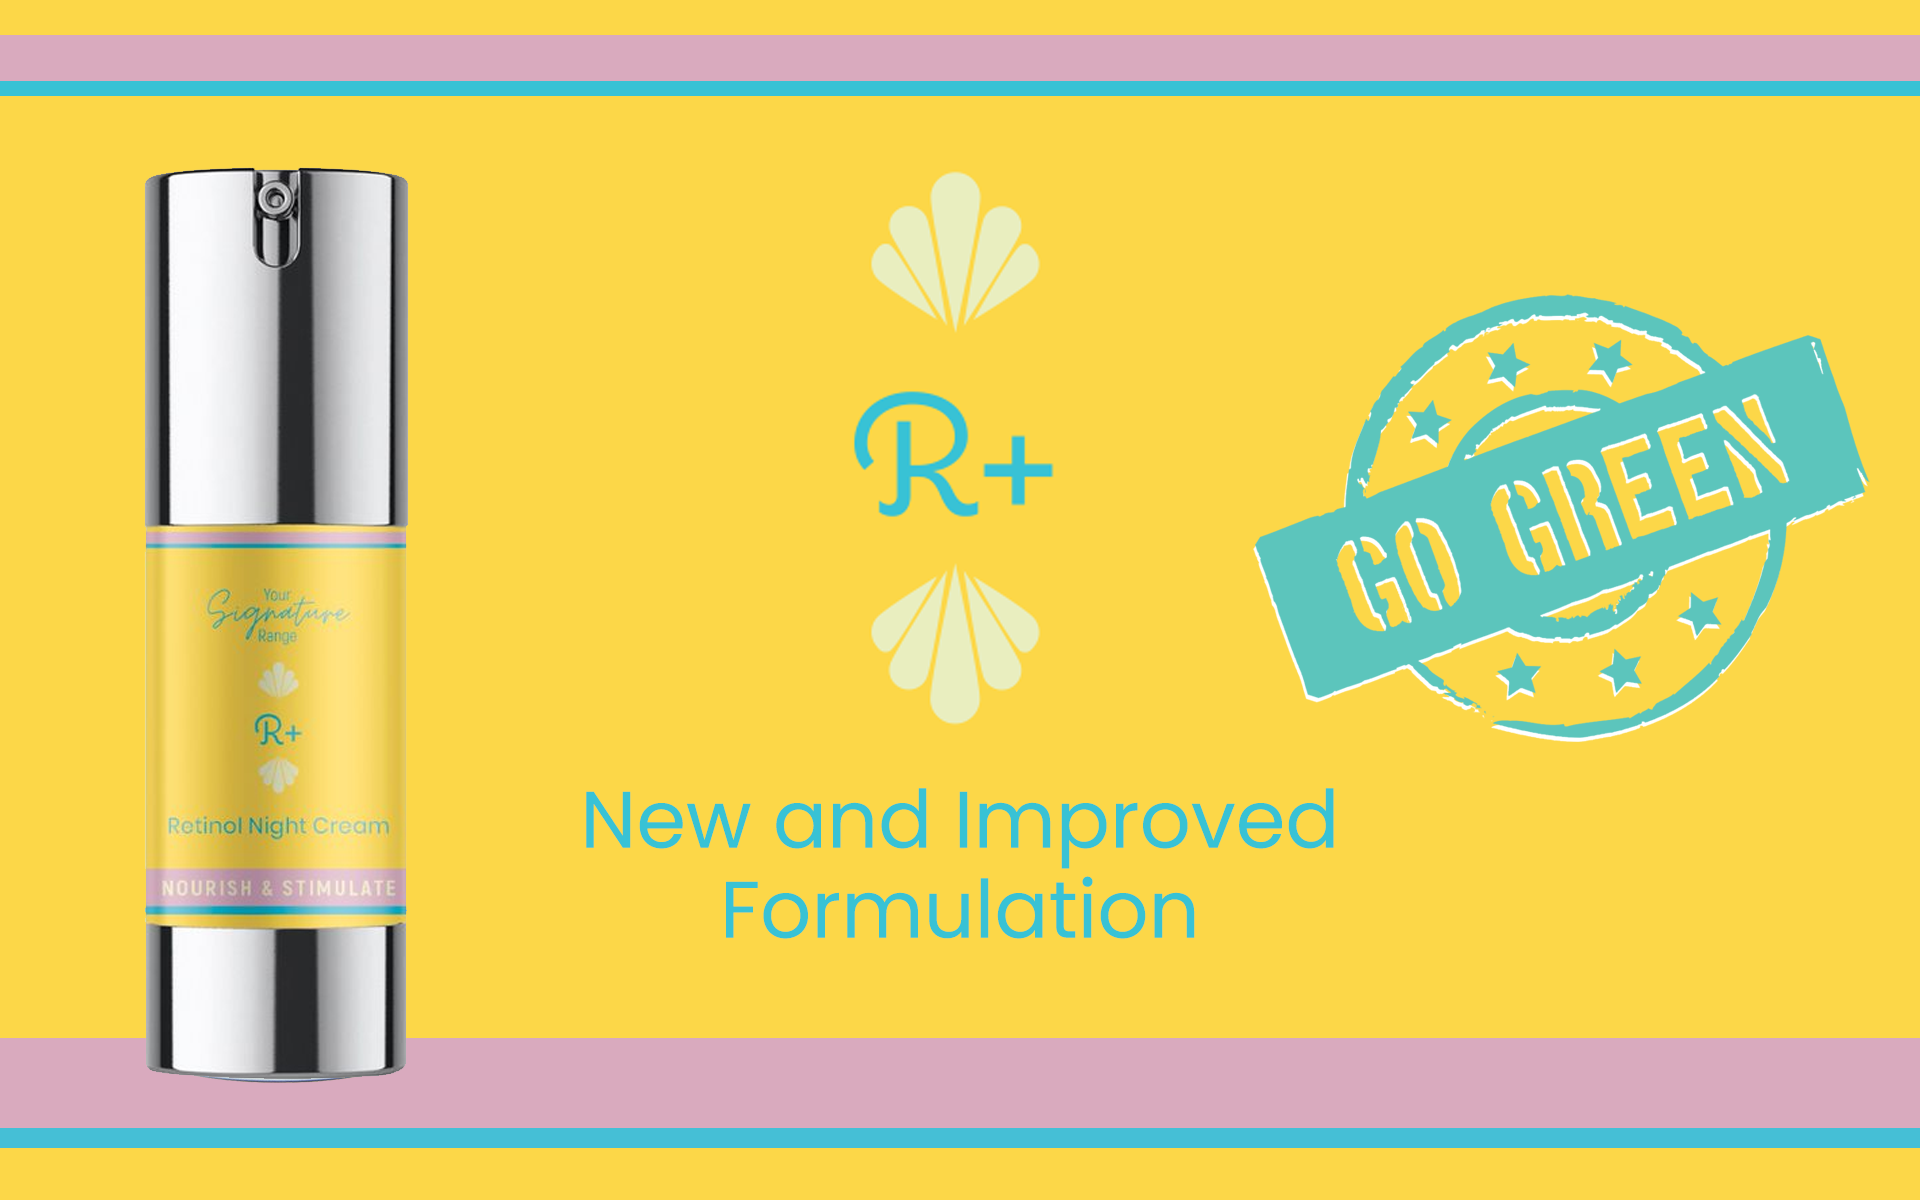 R+: New Formulation